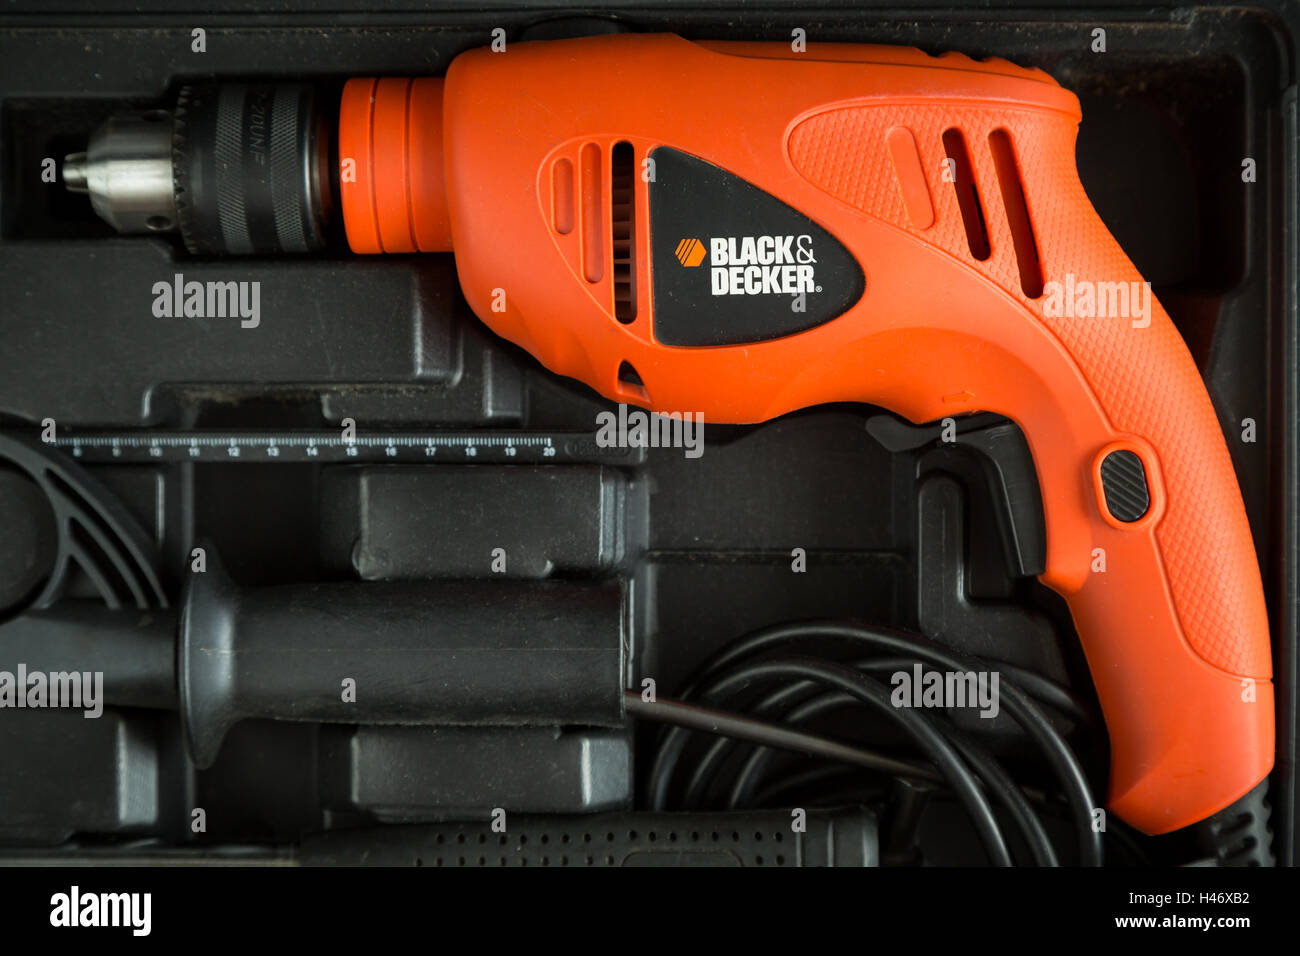 https://c8.alamy.com/comp/H46XB2/black-decker-tool-hammer-drill-kit-with-accessories-H46XB2.jpg